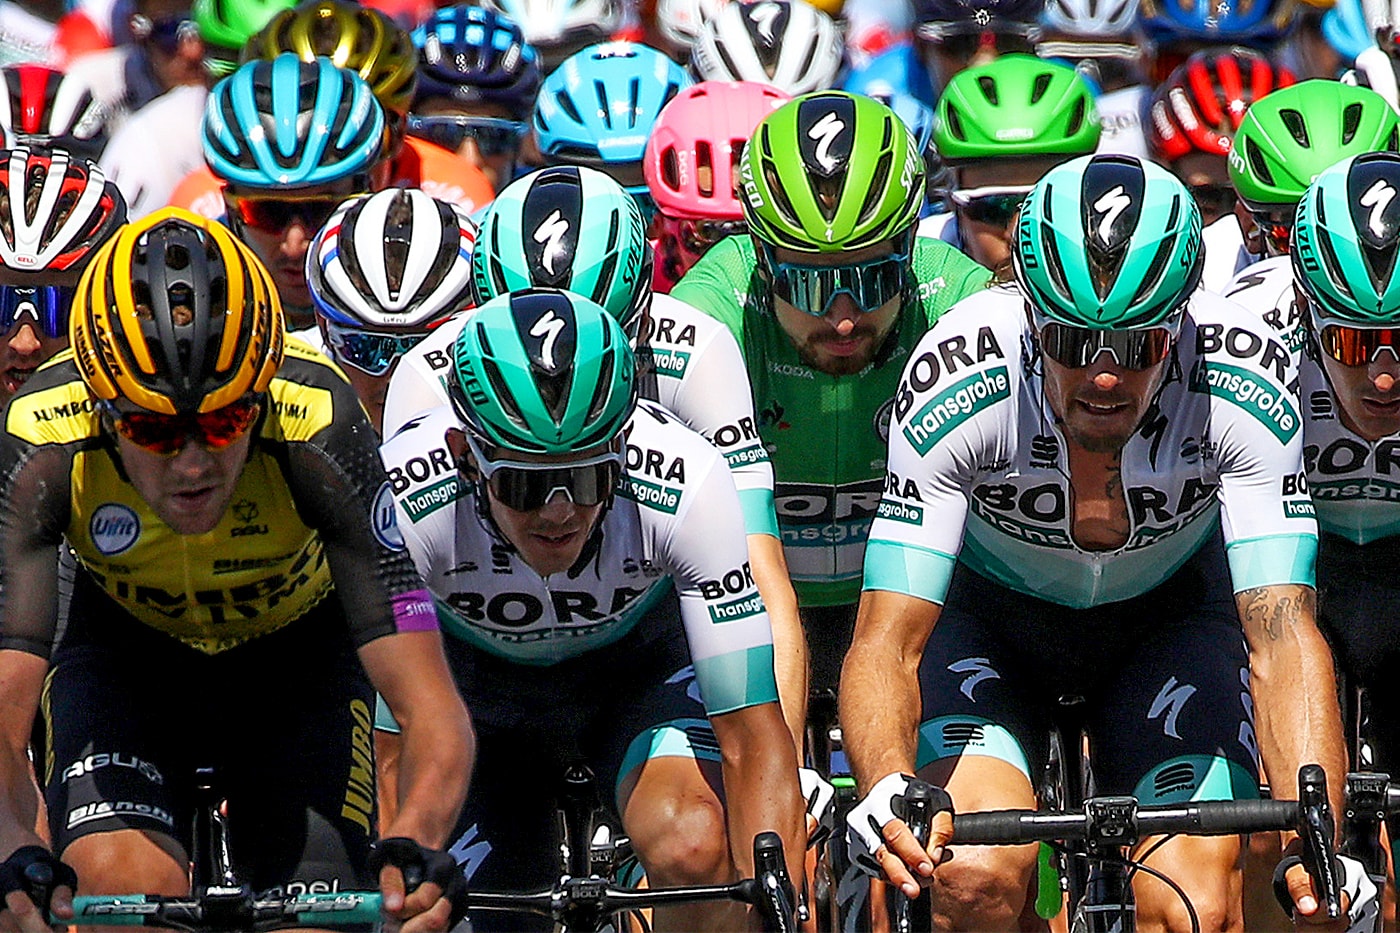 Tour de France Mechanical doping claims cycling news Tadej Pogačar UAE Cheating Doping sports cycling motors f1 energy recovery